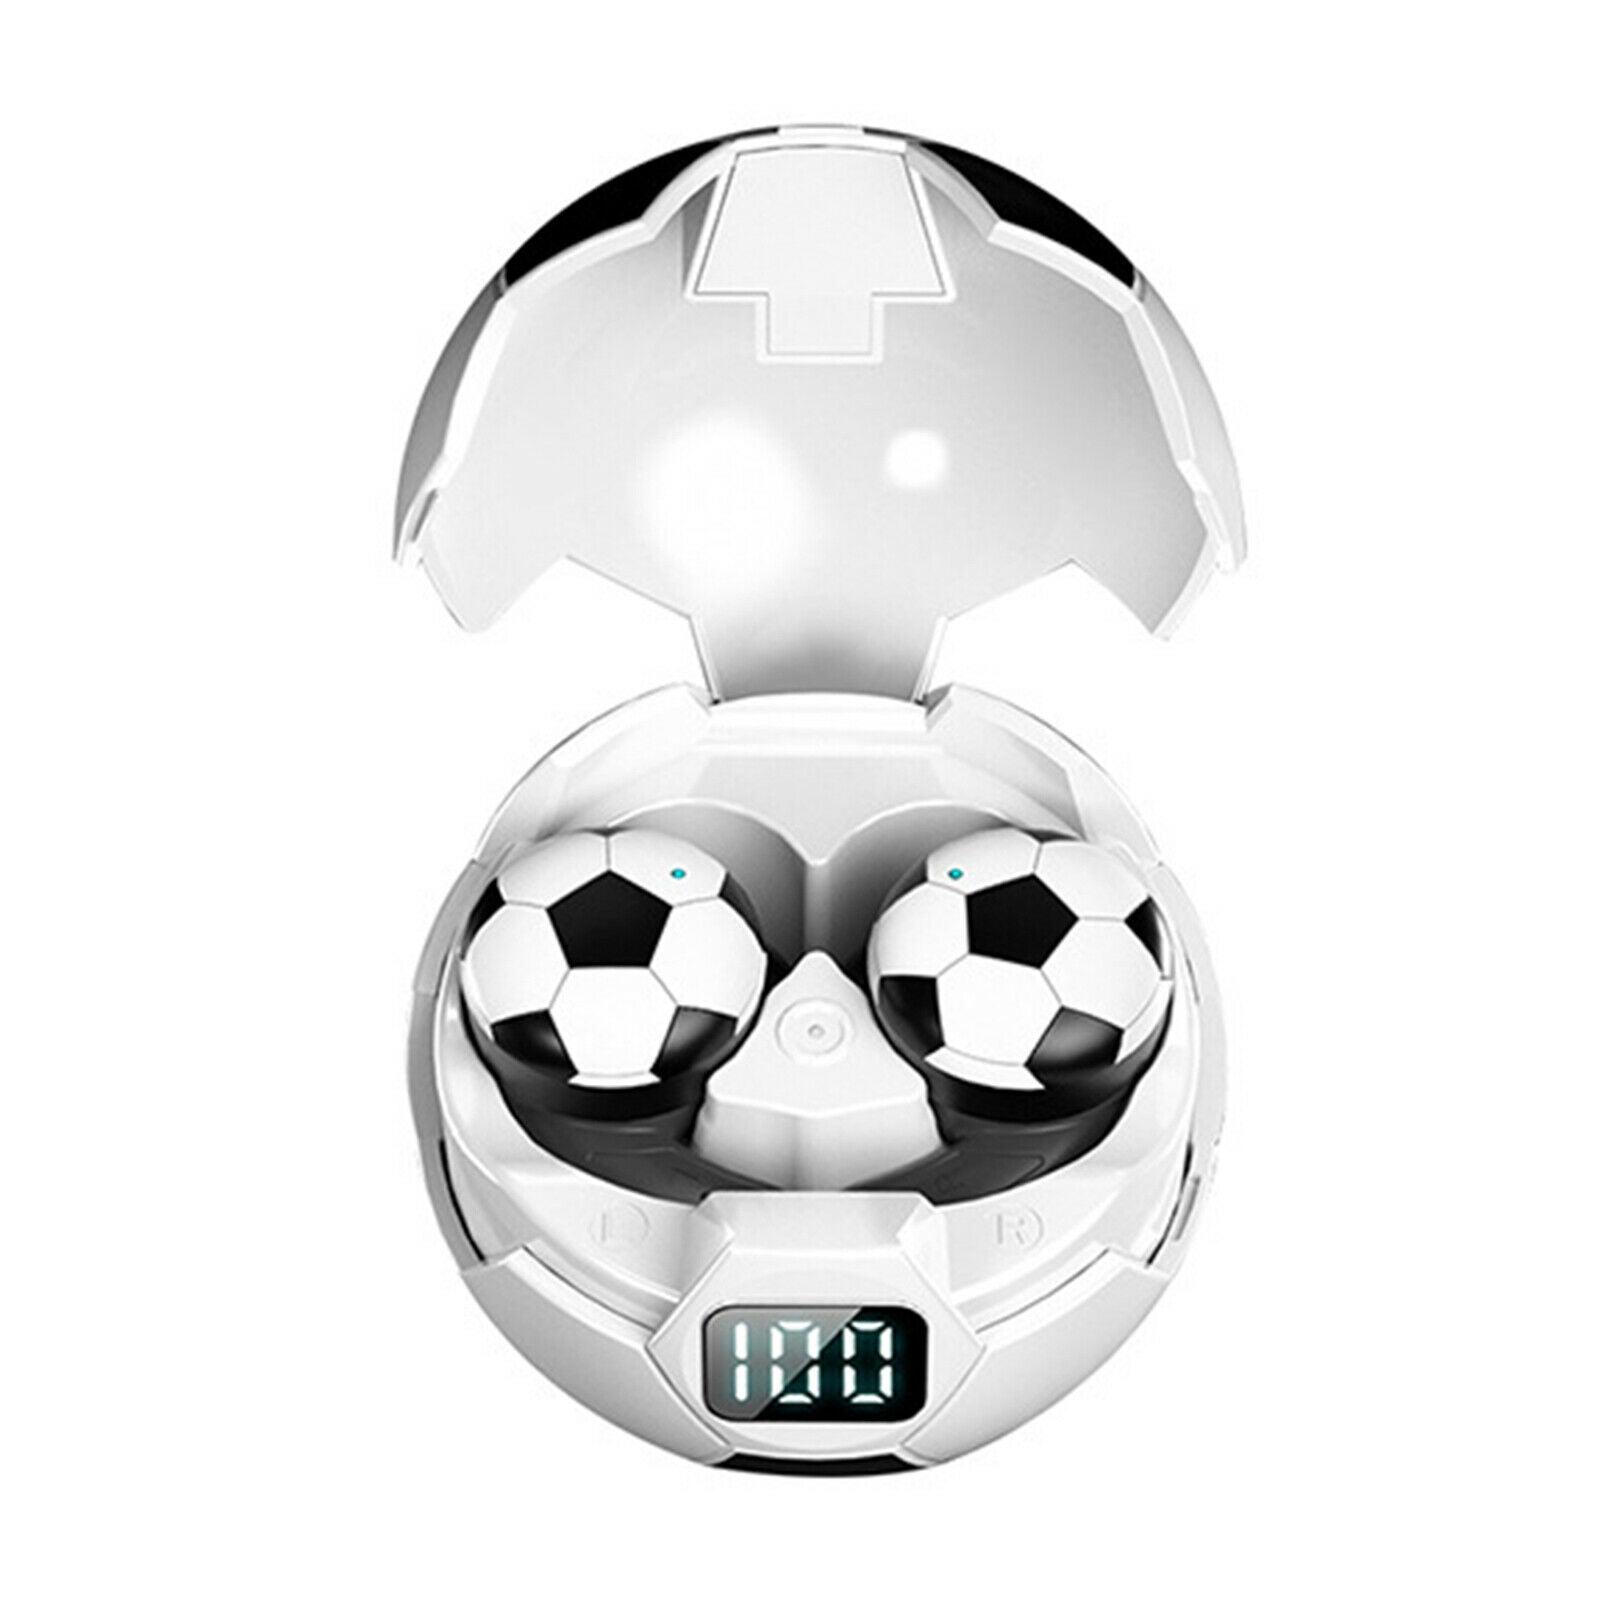 AQ009 Football TWS Wireless Earphone Headsets Earbuds Headphones w/Mic IPX7